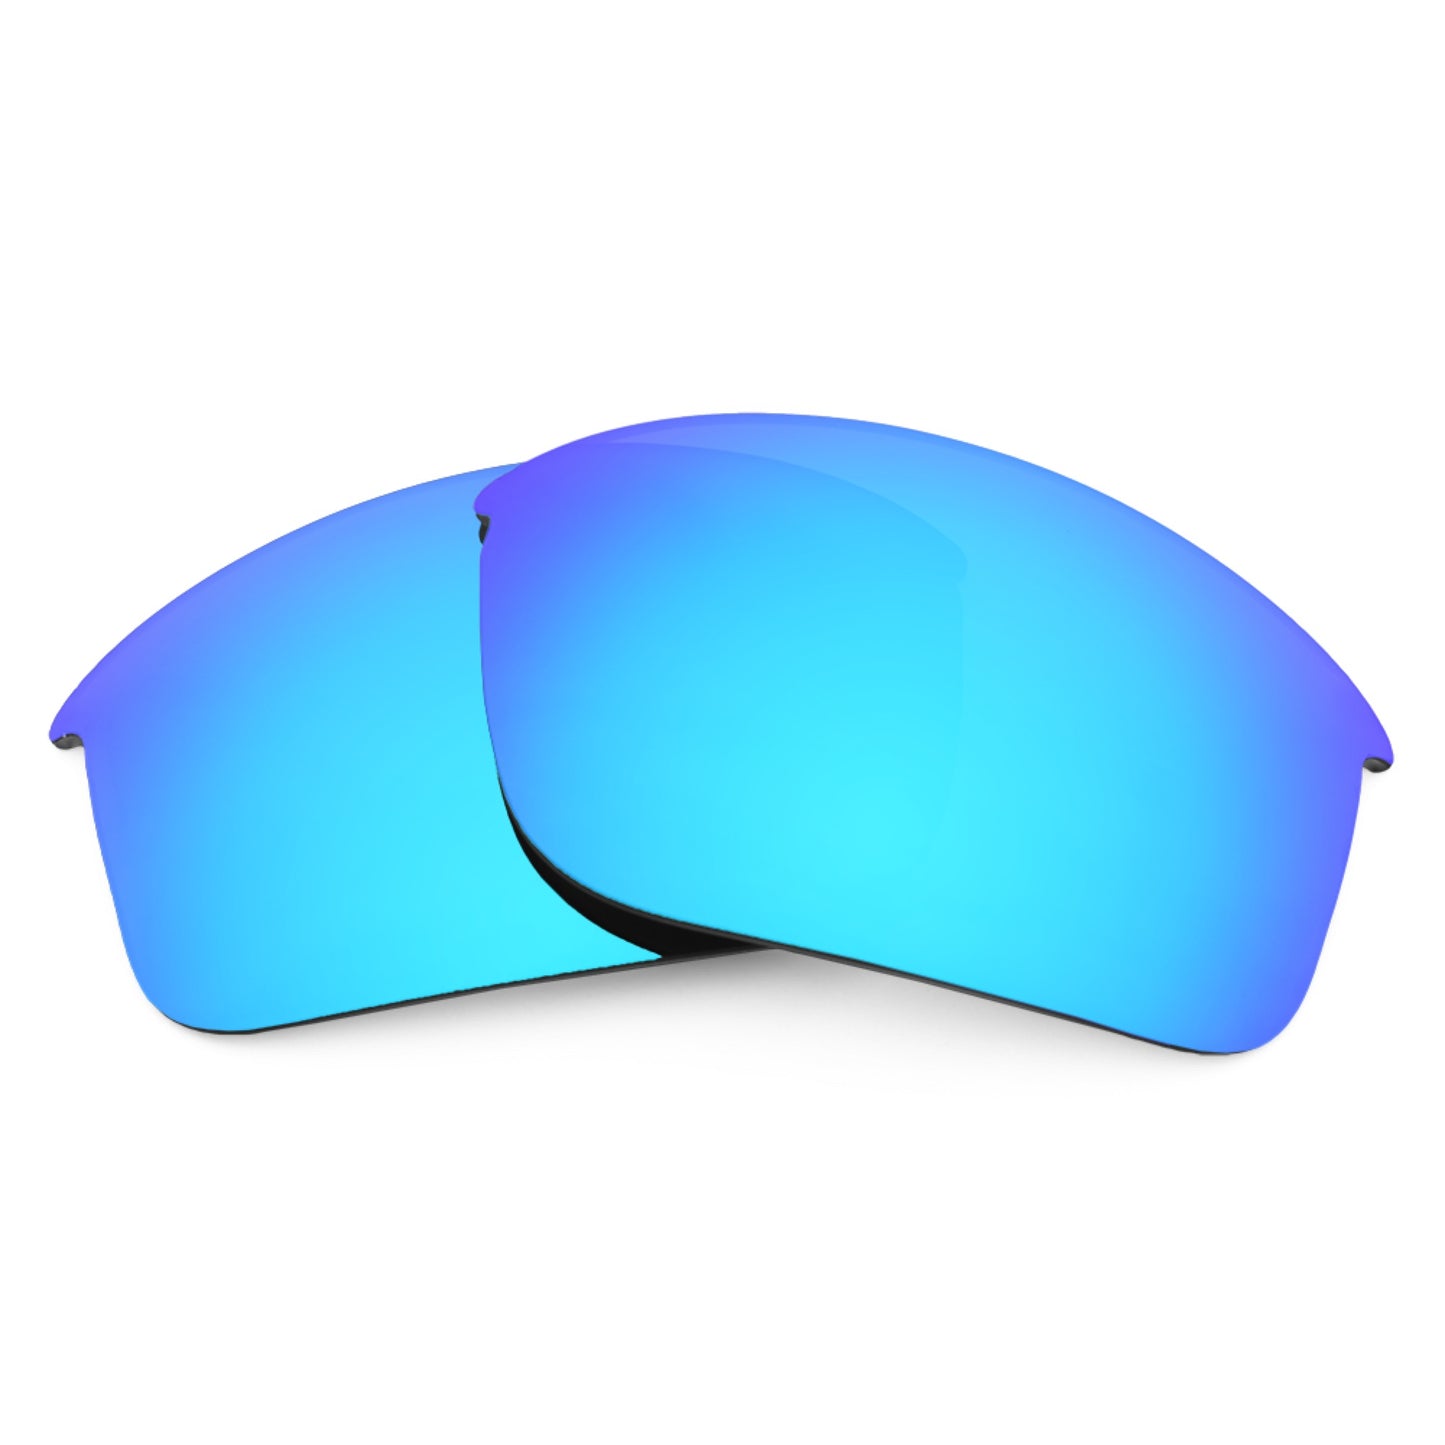 Revant replacement lenses for Oakley Sliver Edge (Low Bridge Fit) Elite Polarized Ice Blue